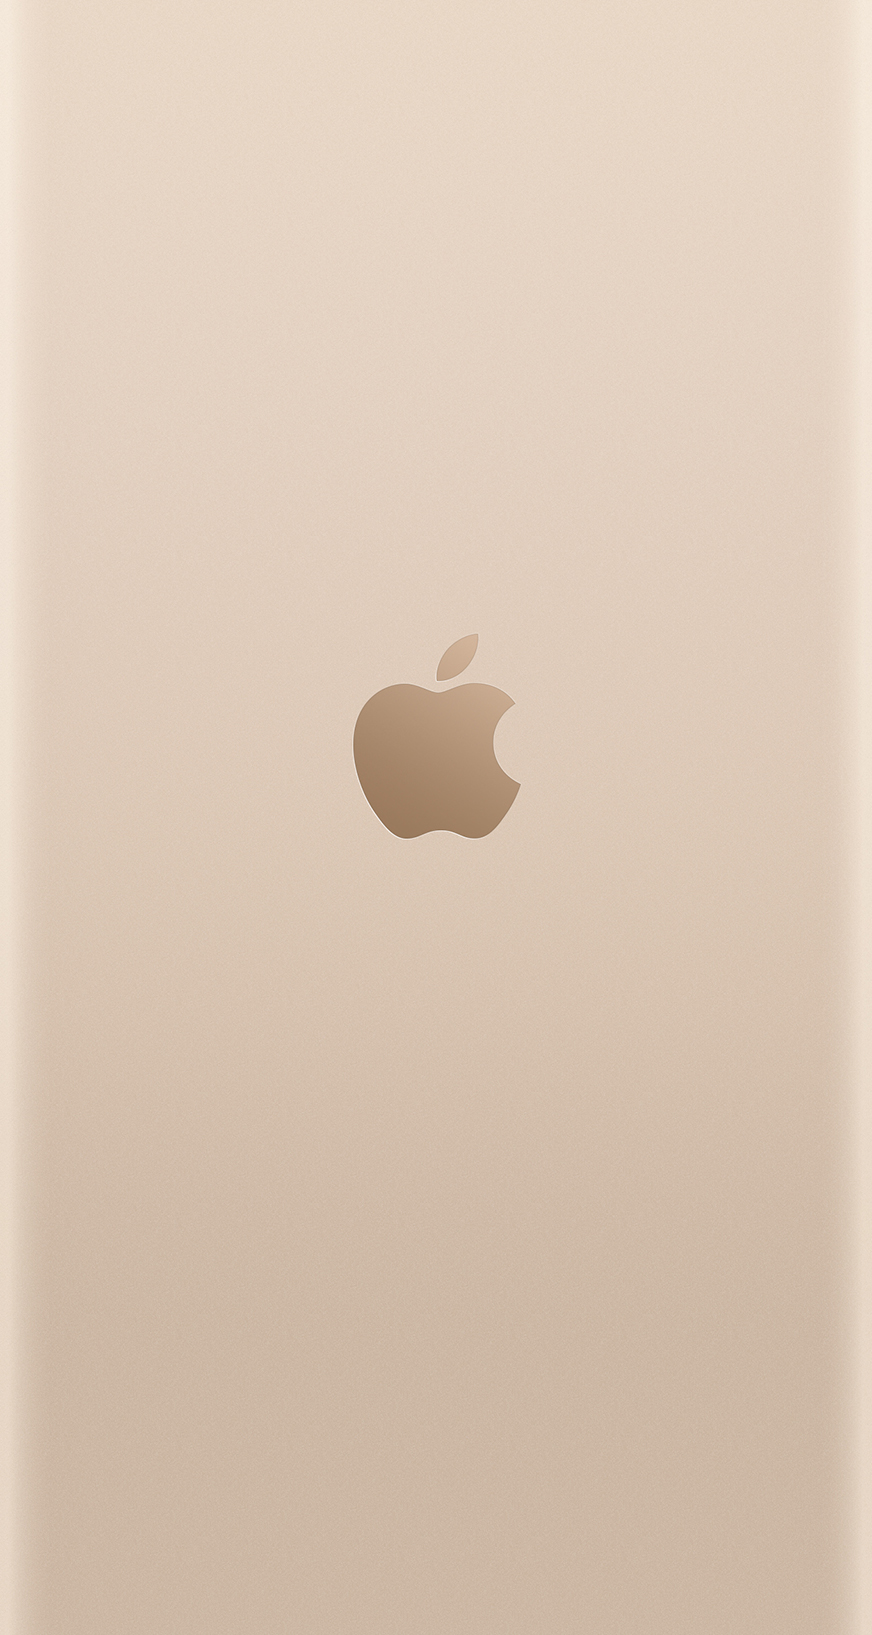 gold wallpaper iphone 6,white,beige,heart,ipad,plant